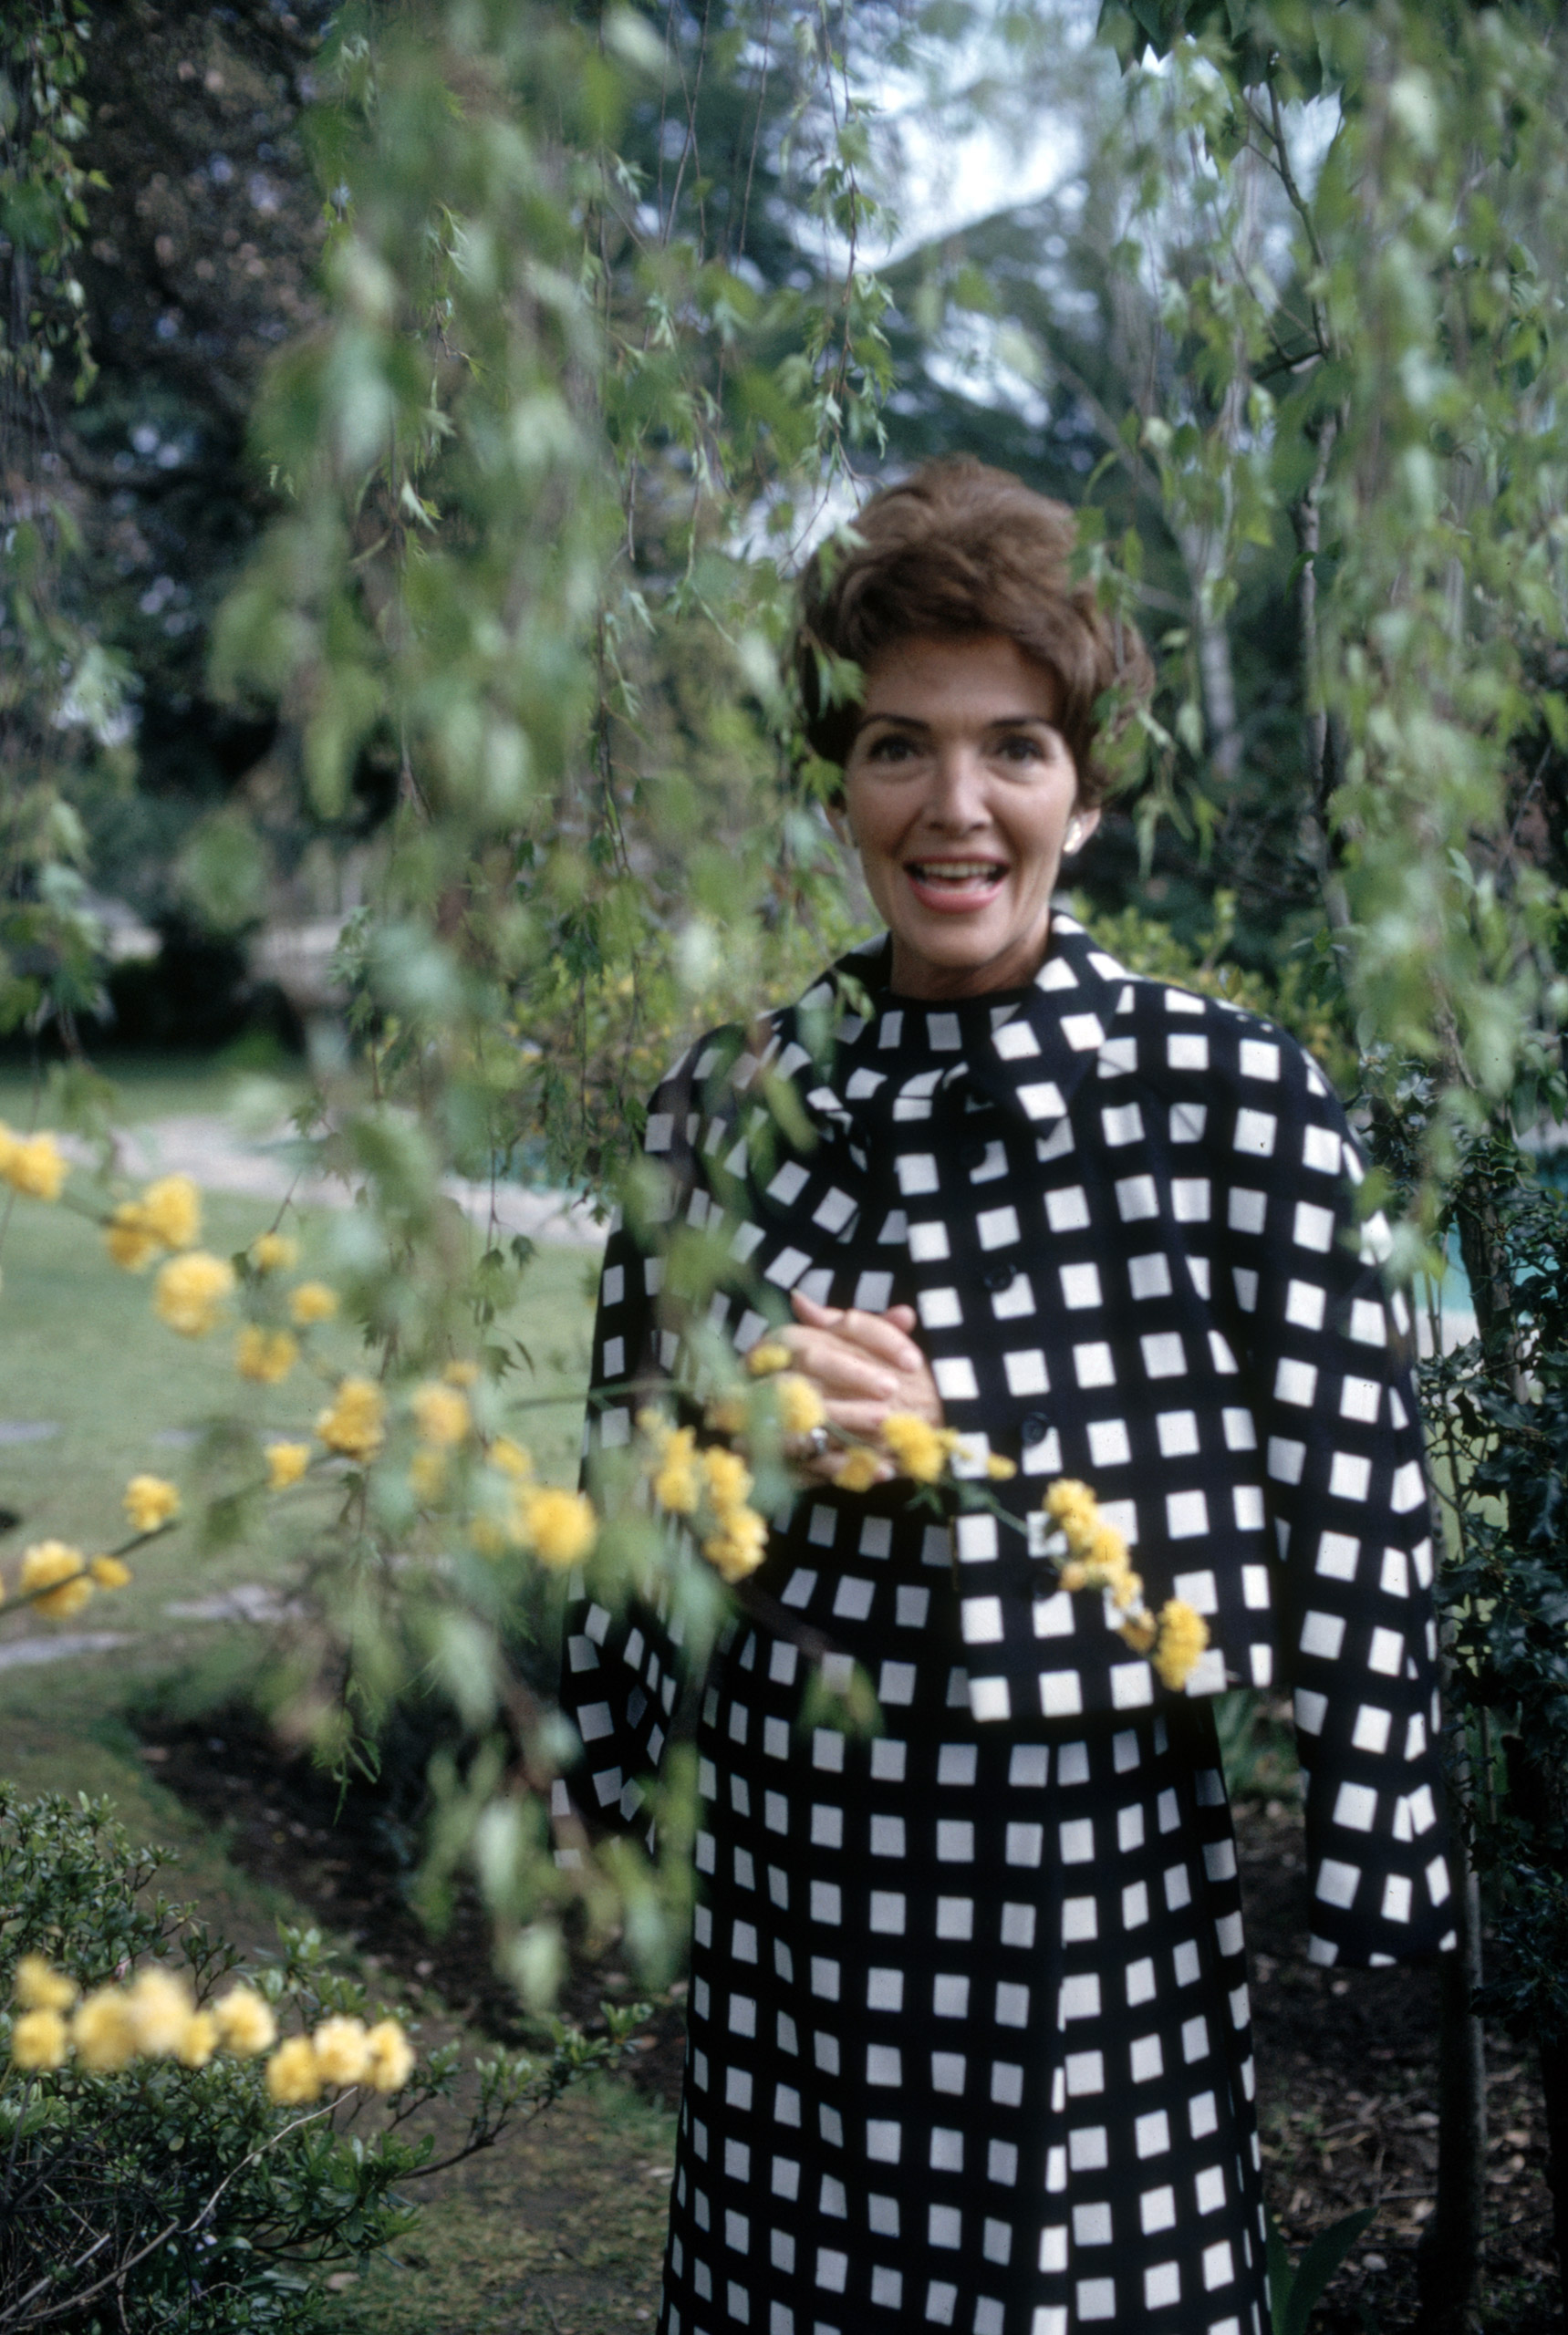 Nancy Reagan wearing a patterned dress from designer Galanos, 1967.